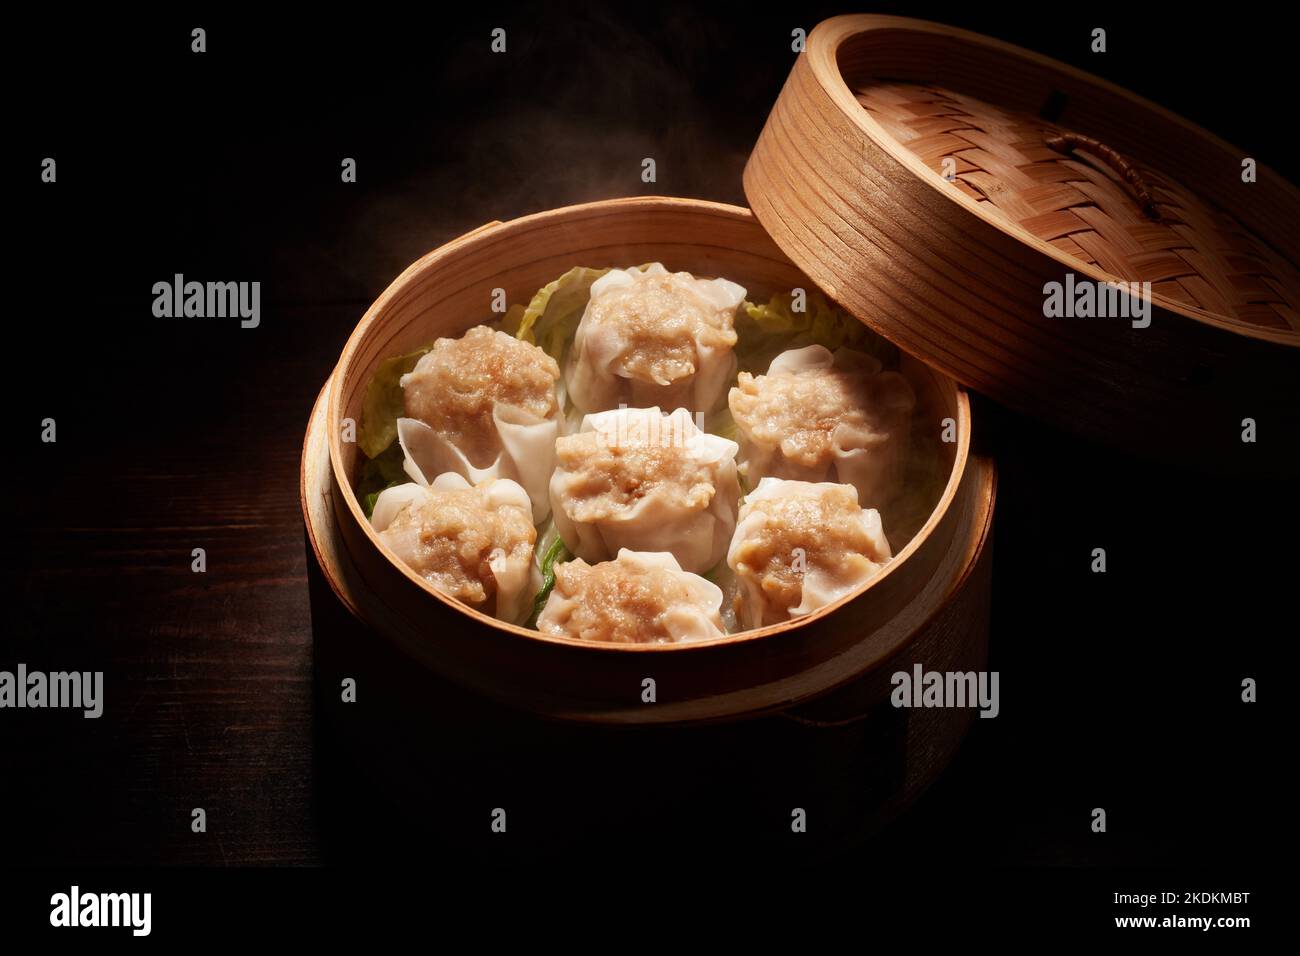 Chinese style dumplings Stock Photo